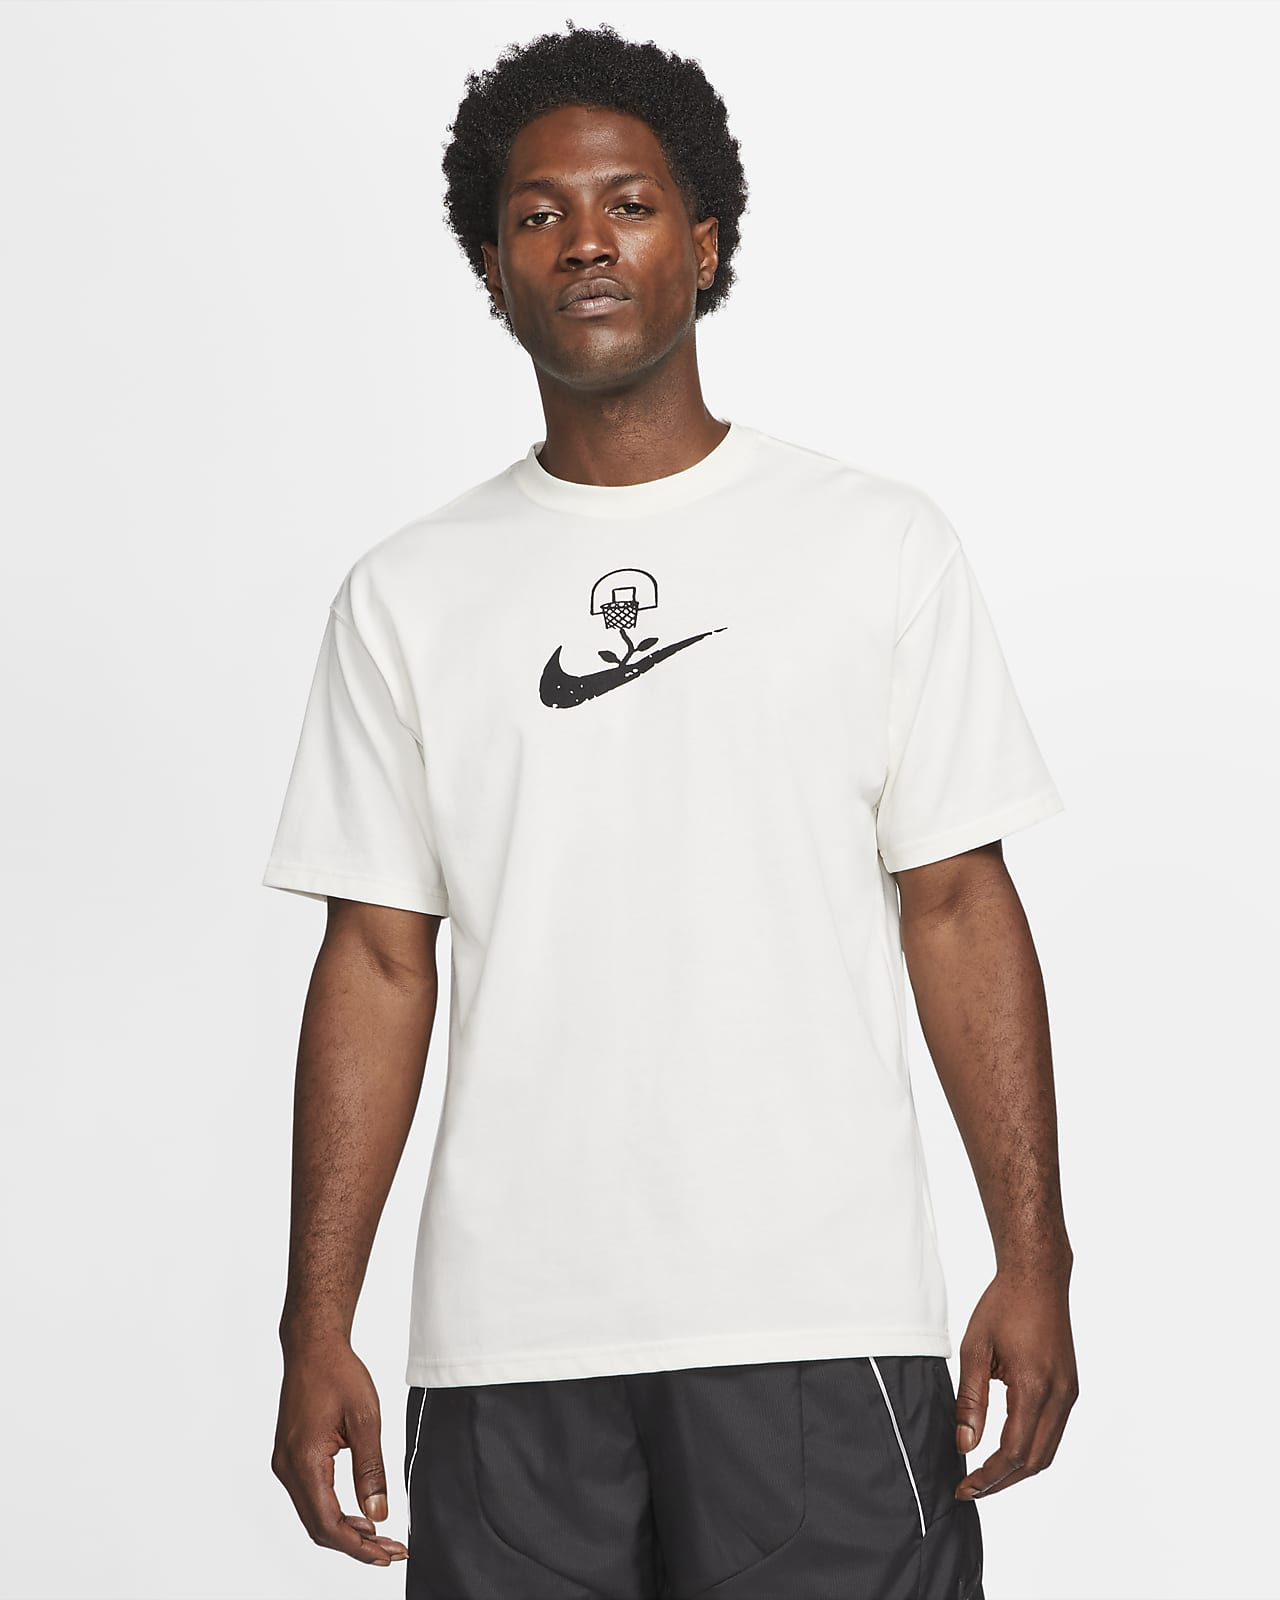 Nike公式 ナイキ メンズ ショートスリーブ バスケットボール Tシャツ オンラインストア 通販サイト